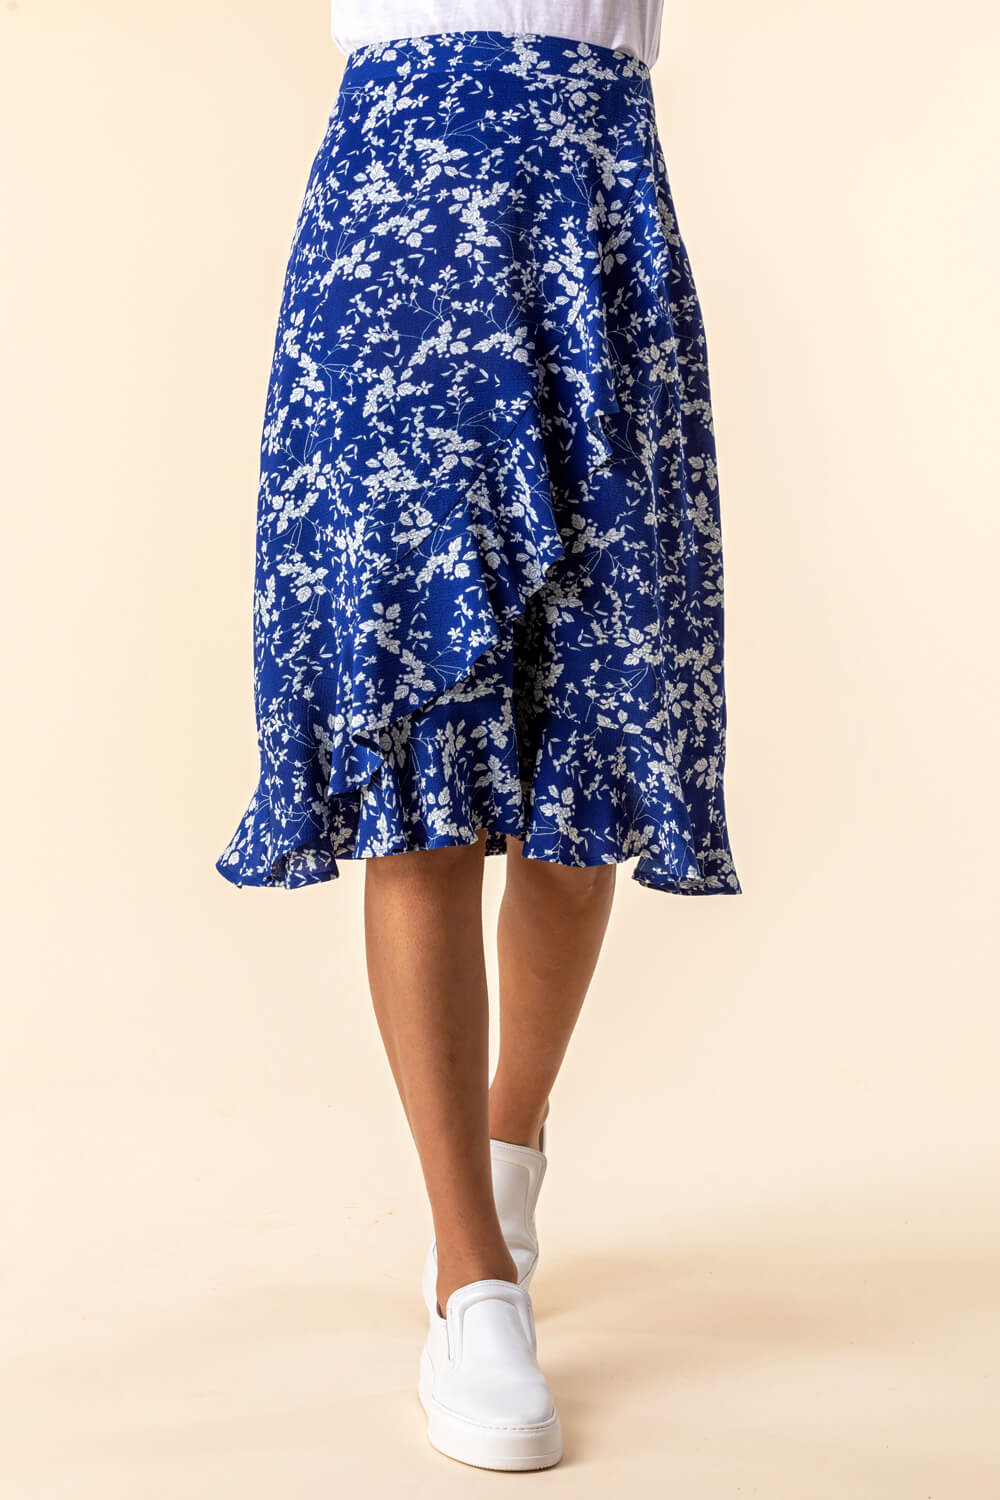 Ditsy Floral Ruffle Detail Skirt in Royal Blue - Roman Originals UK